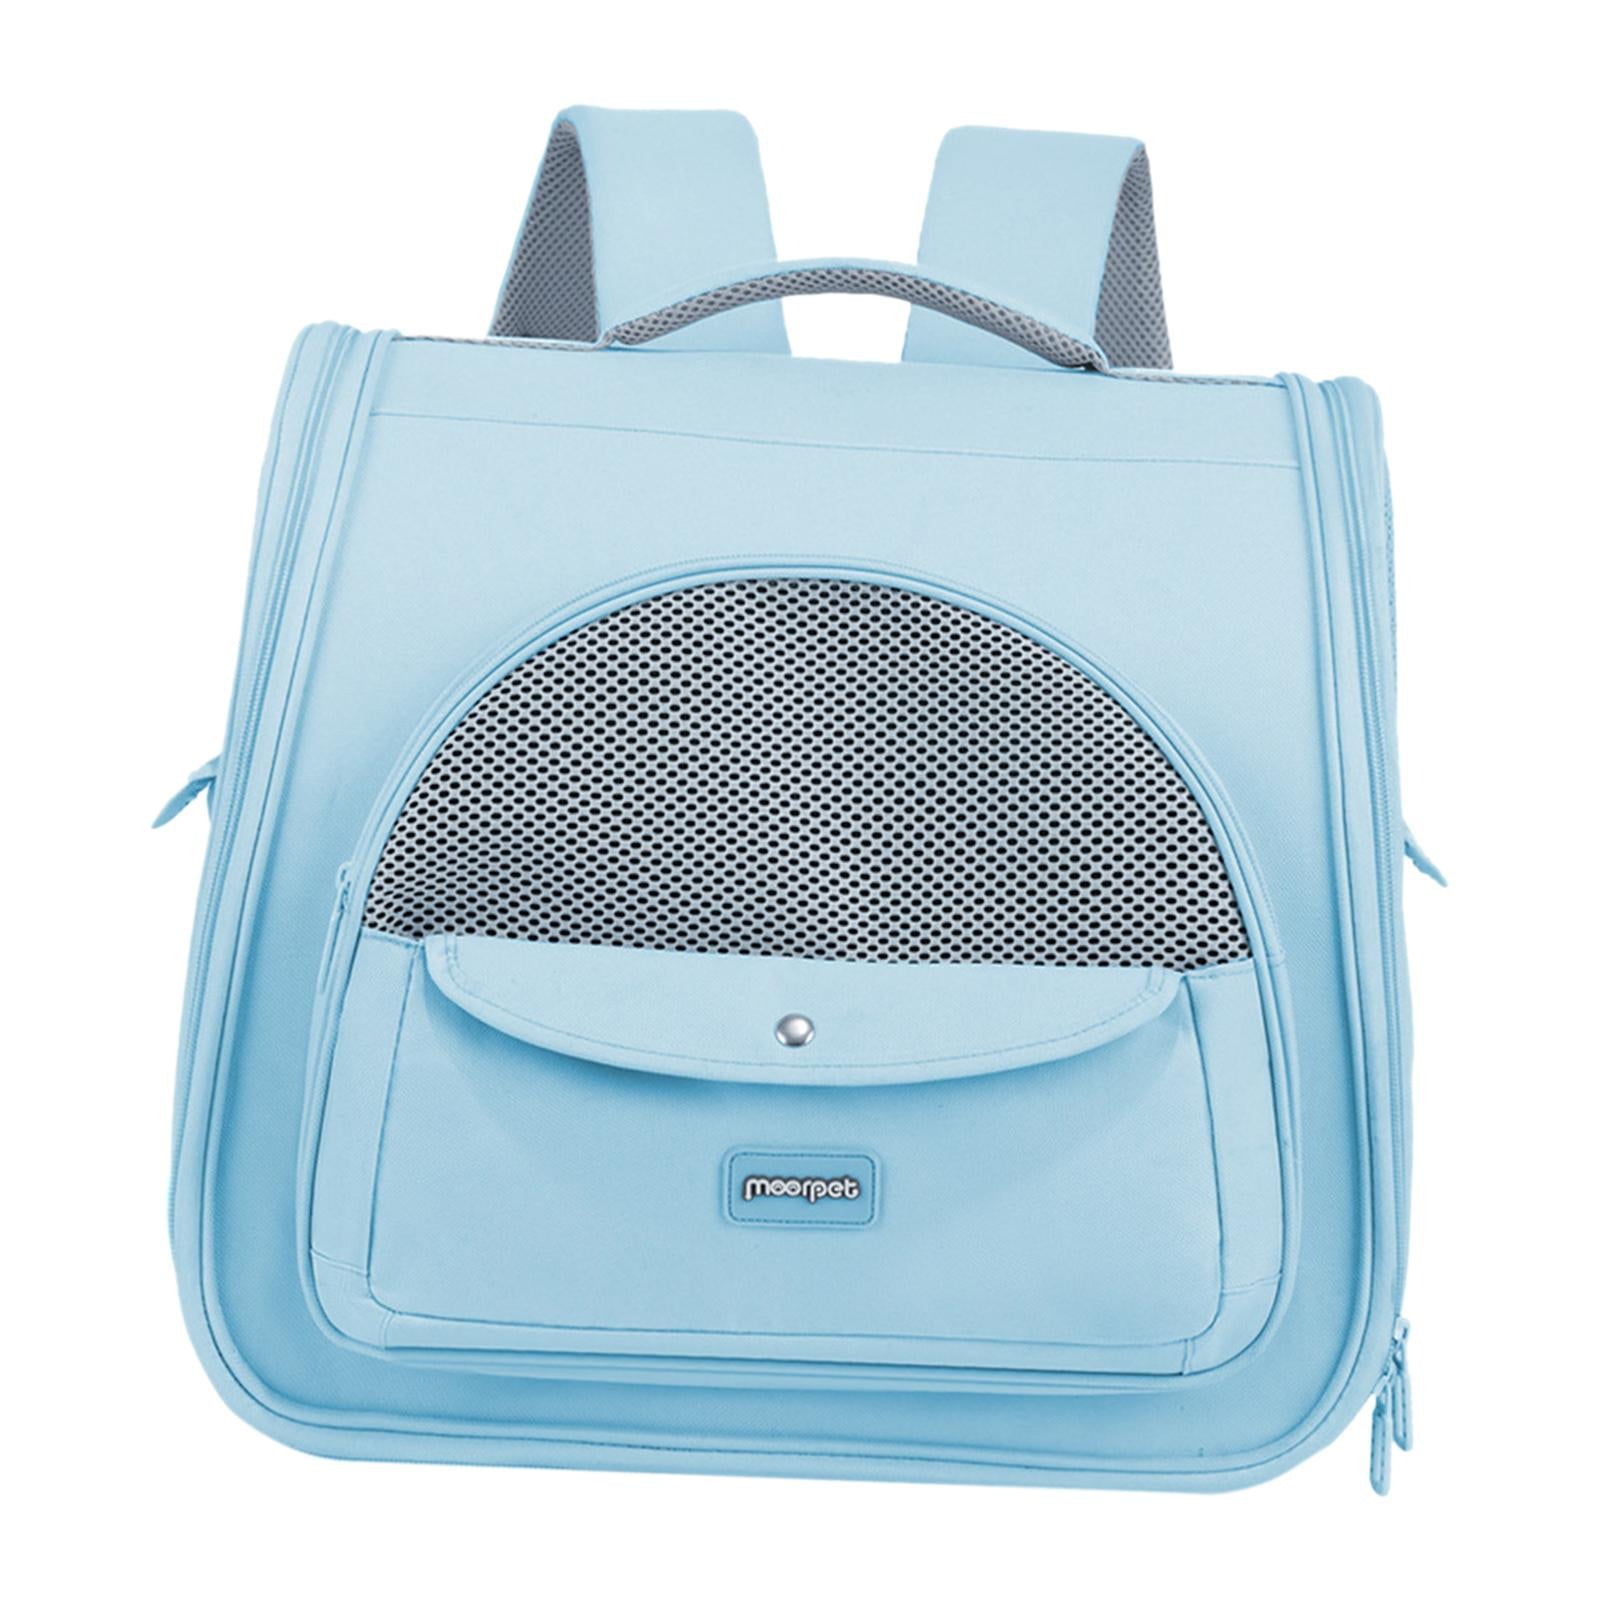 Pet Carrier Backpack Soft Handbag Travel Bag for Dogs Cats Hiking Rabbits Blue